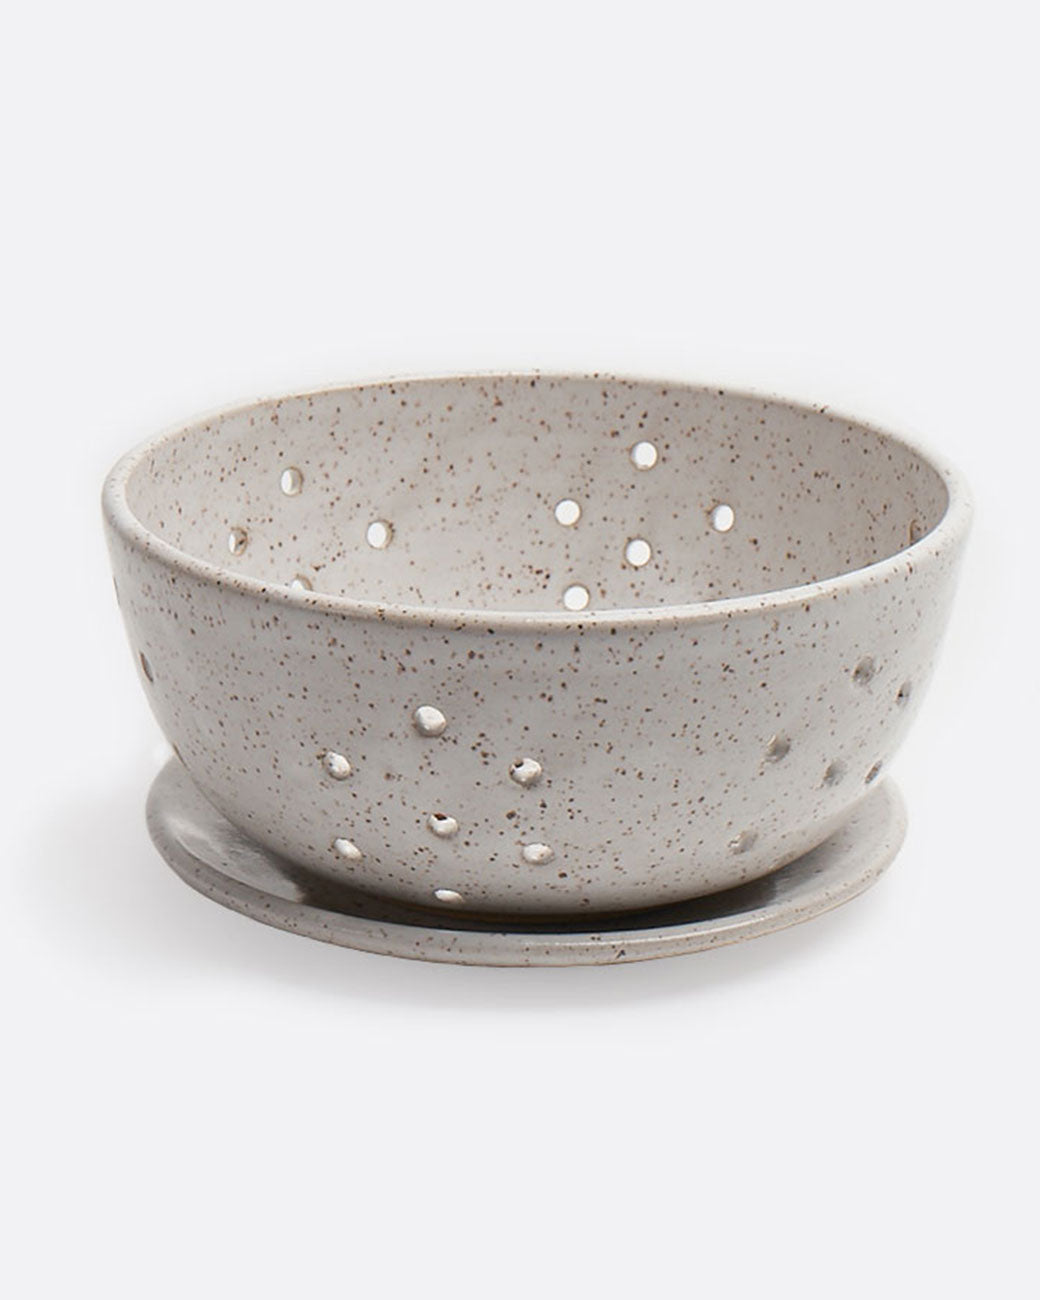 Large white stoneware berry bowl